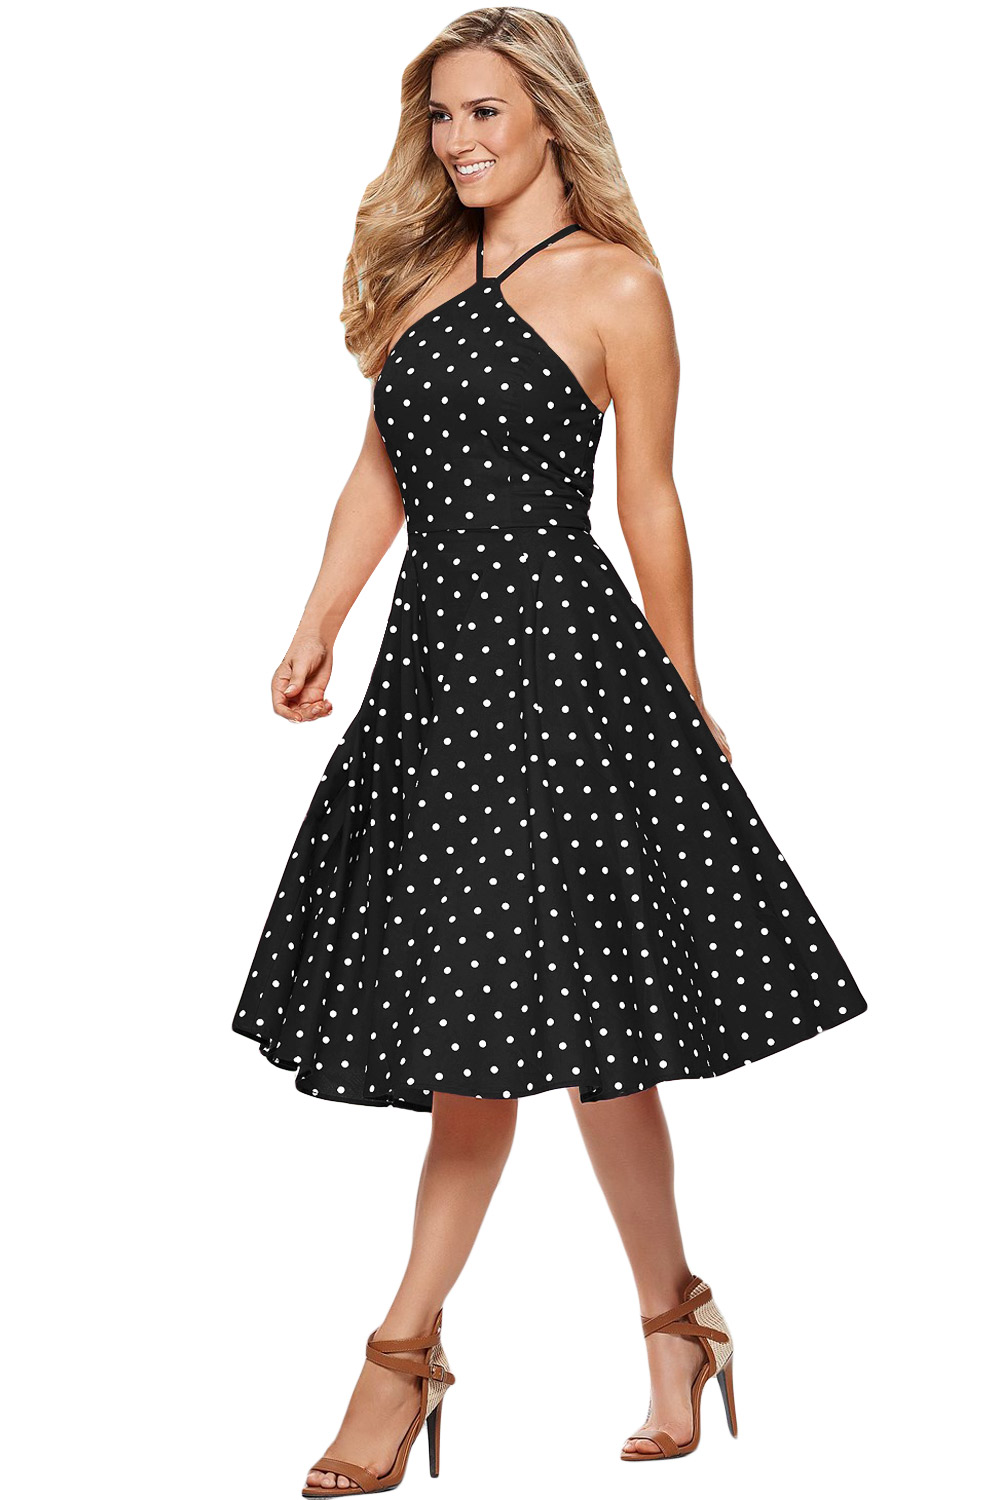 BY610141-2 Black White Polka Dot Flared Vintage Dress